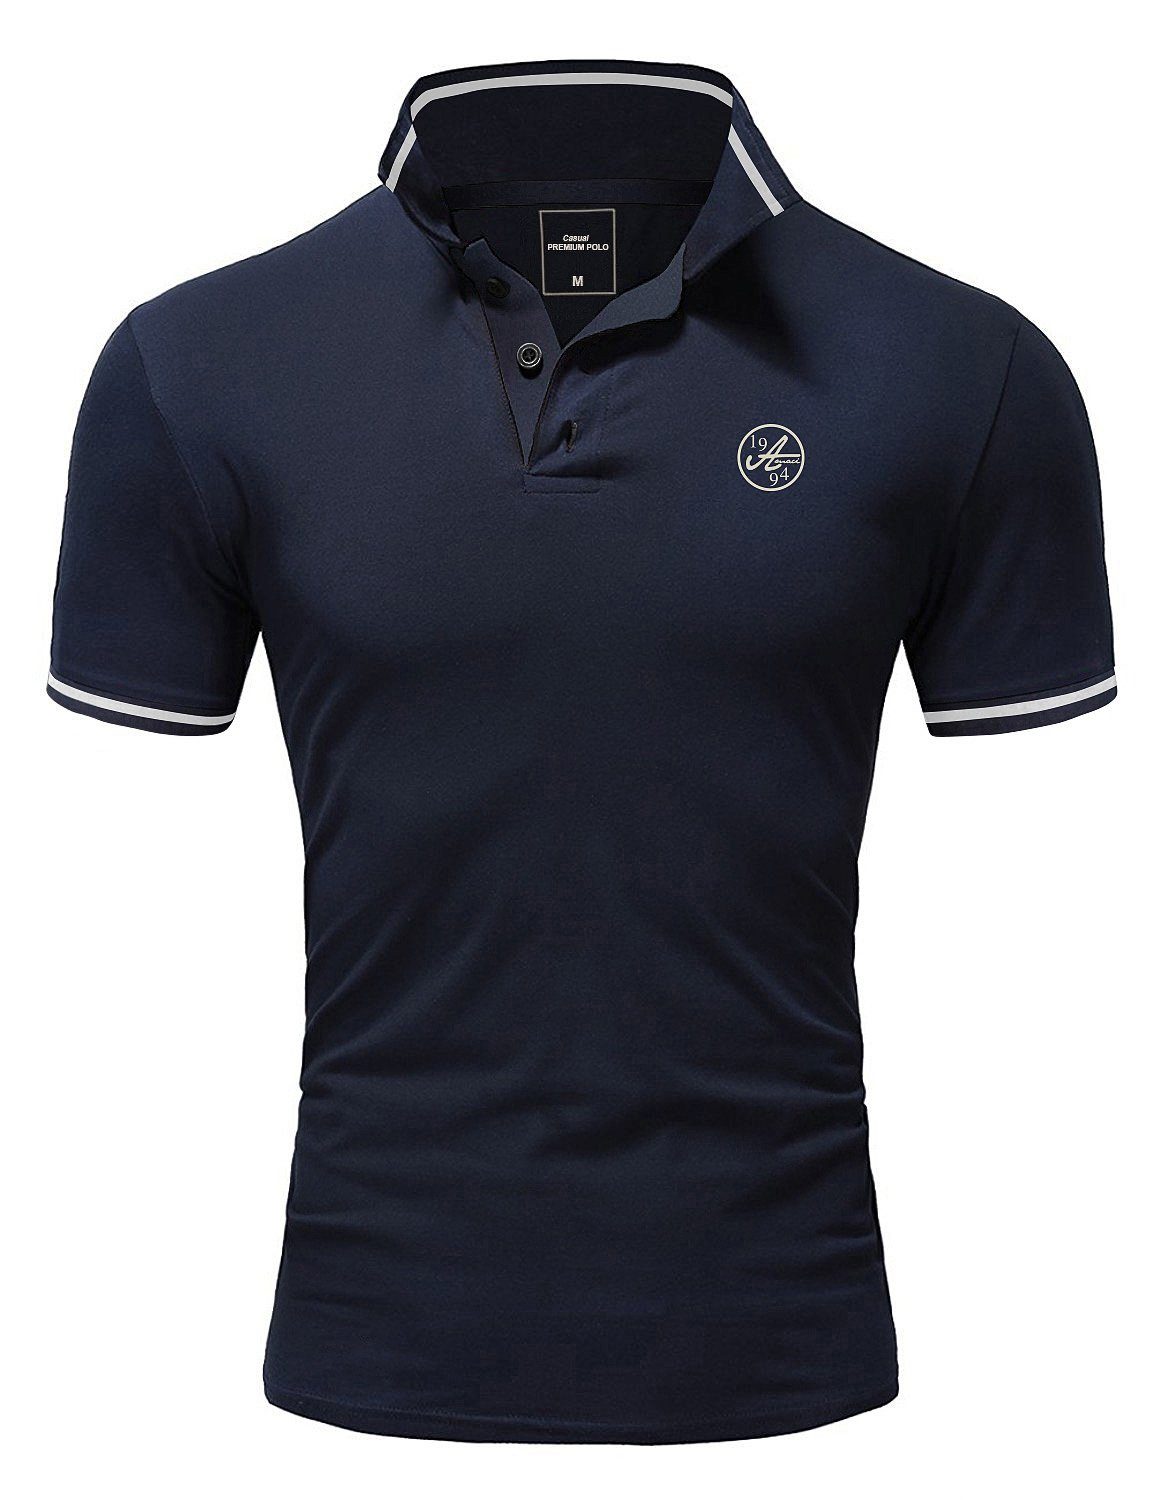 Amaci&Sons Poloshirt MACON Herren Basic Kontrast Stickerei Kurzarm Polohemd T-Shirt Navyblau/Weiß